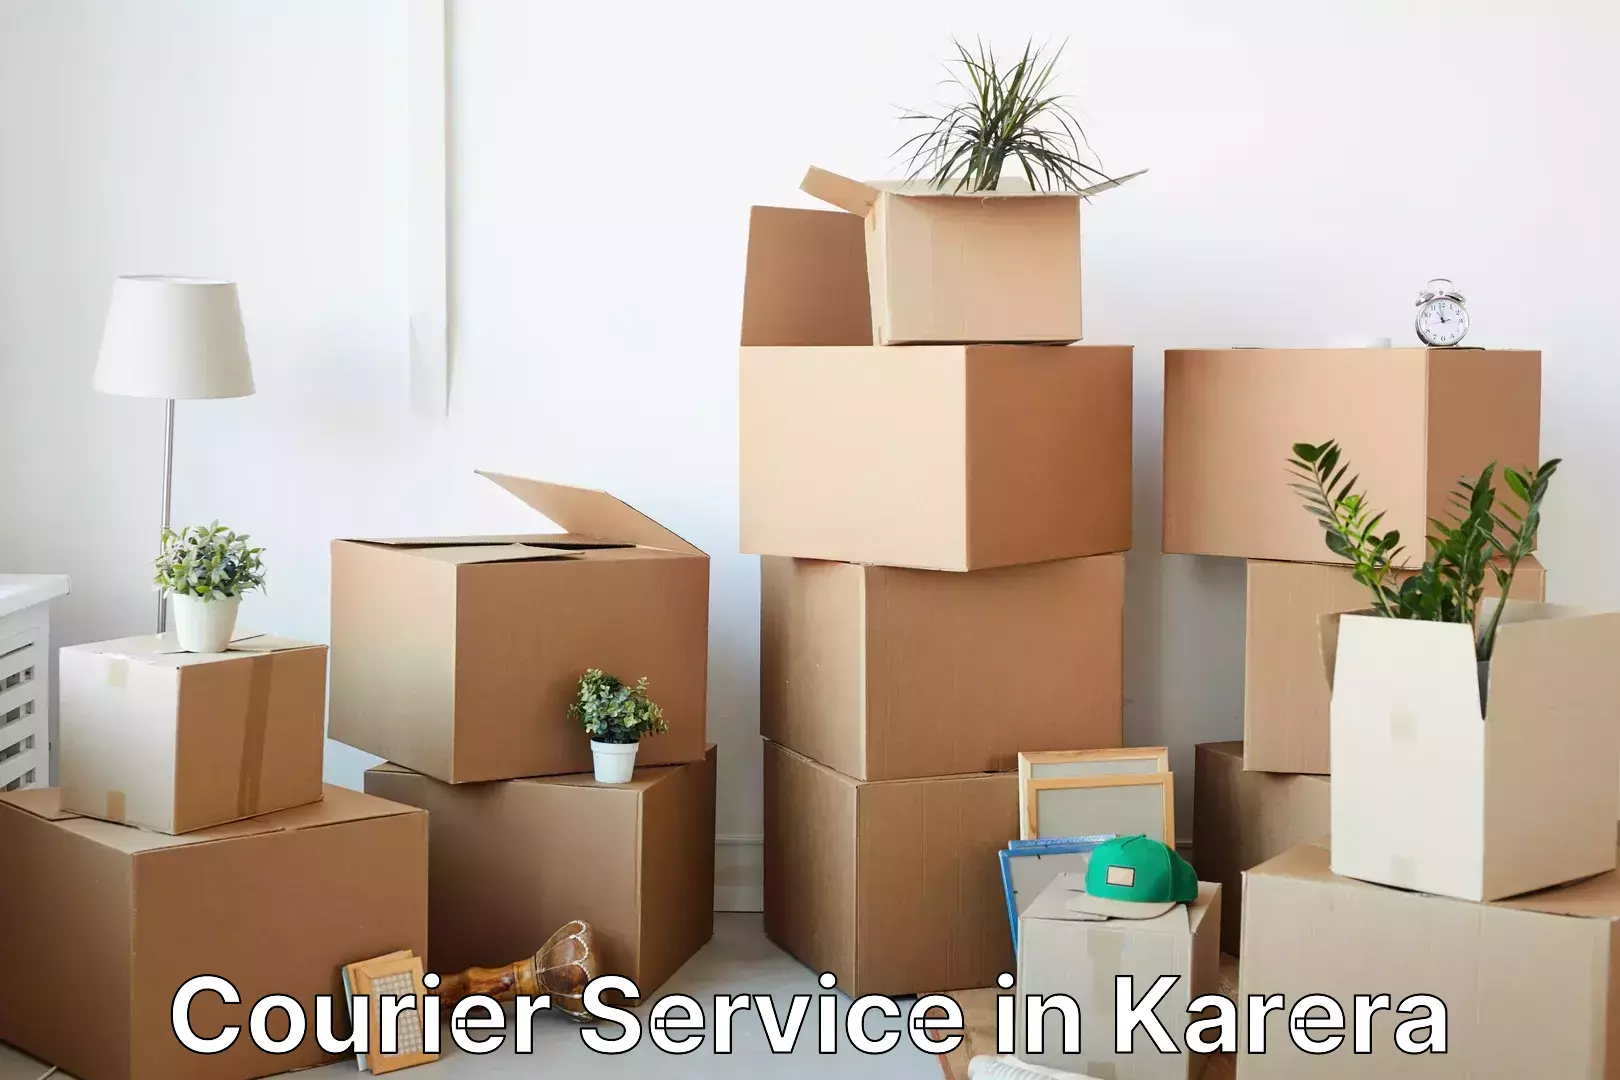 Flexible delivery schedules in Karera